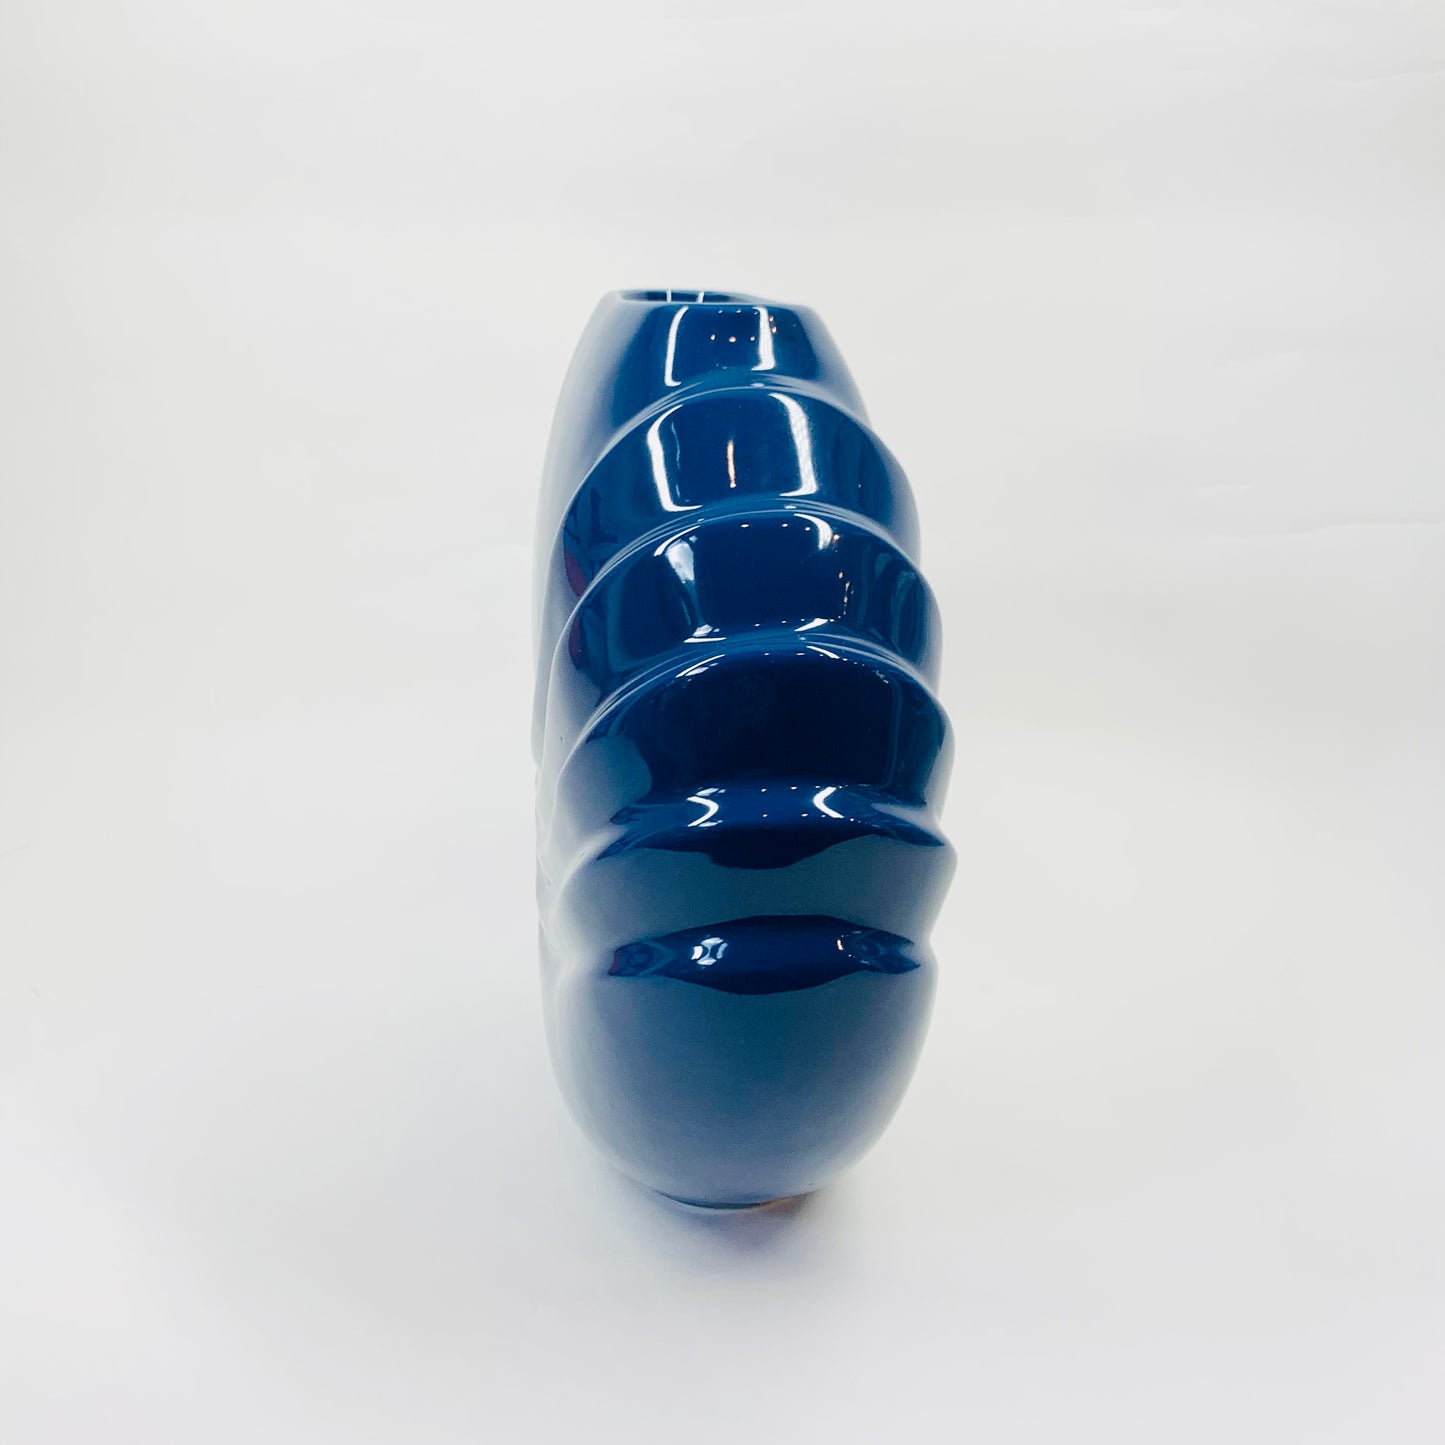 Rare 1970s Japanese blue porcelain round vase